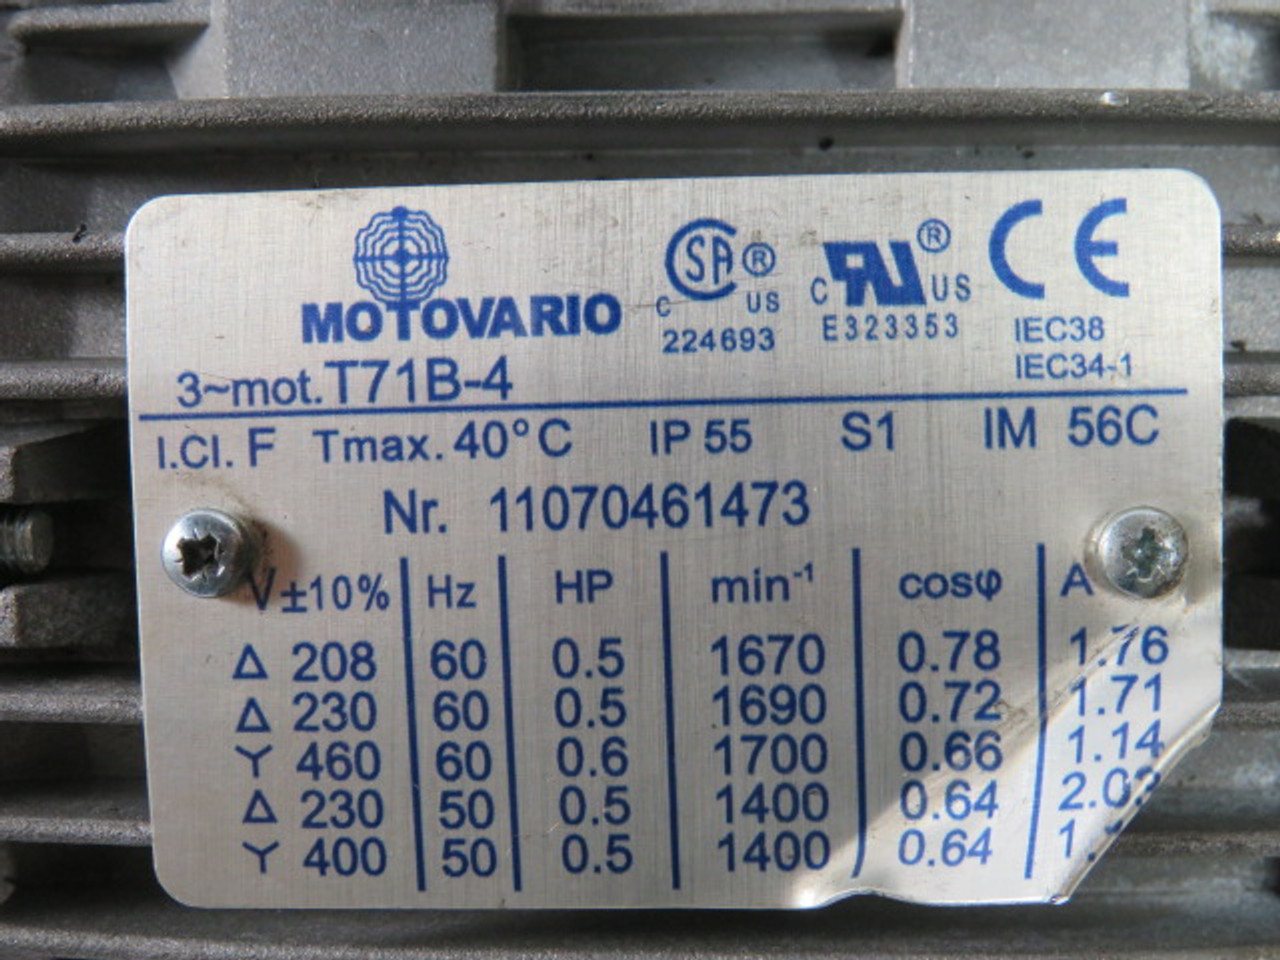 Motovario 0.5HP 1670-1700RPM 208-460V C/W Gear Reducer 10.0:1 Ratio USED